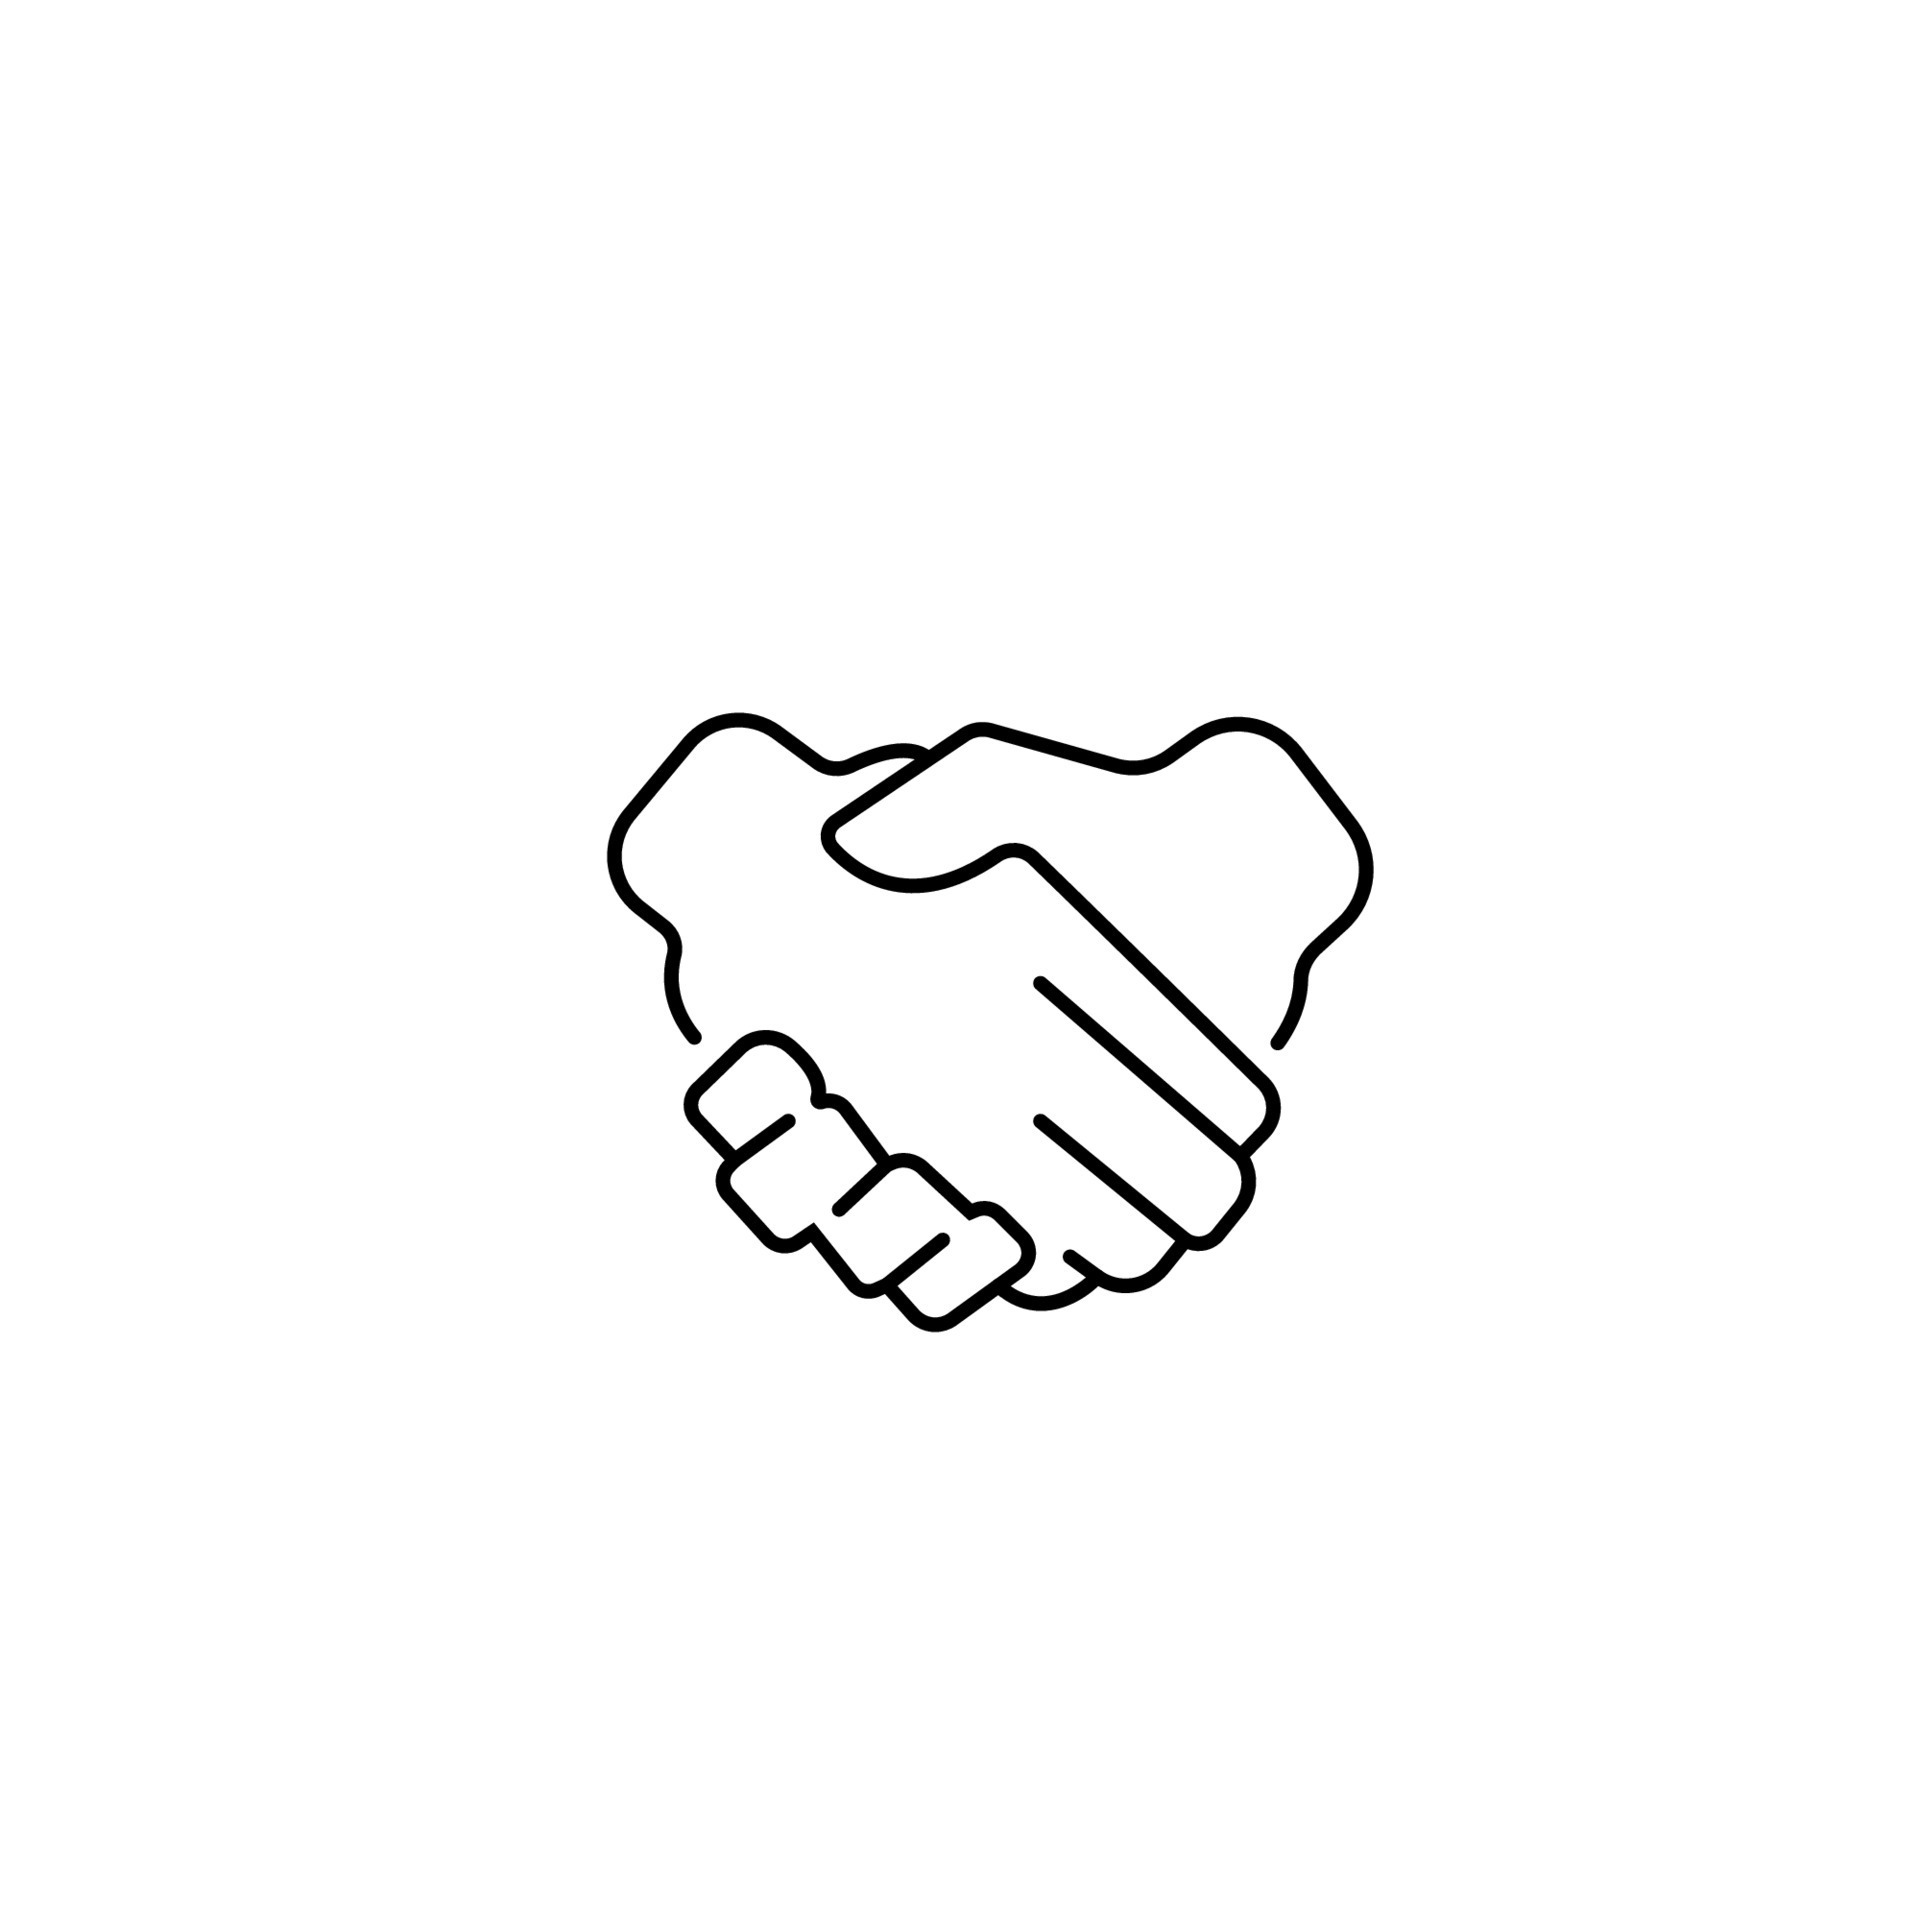 Men shaking hands emoji isolated on white Vector Image